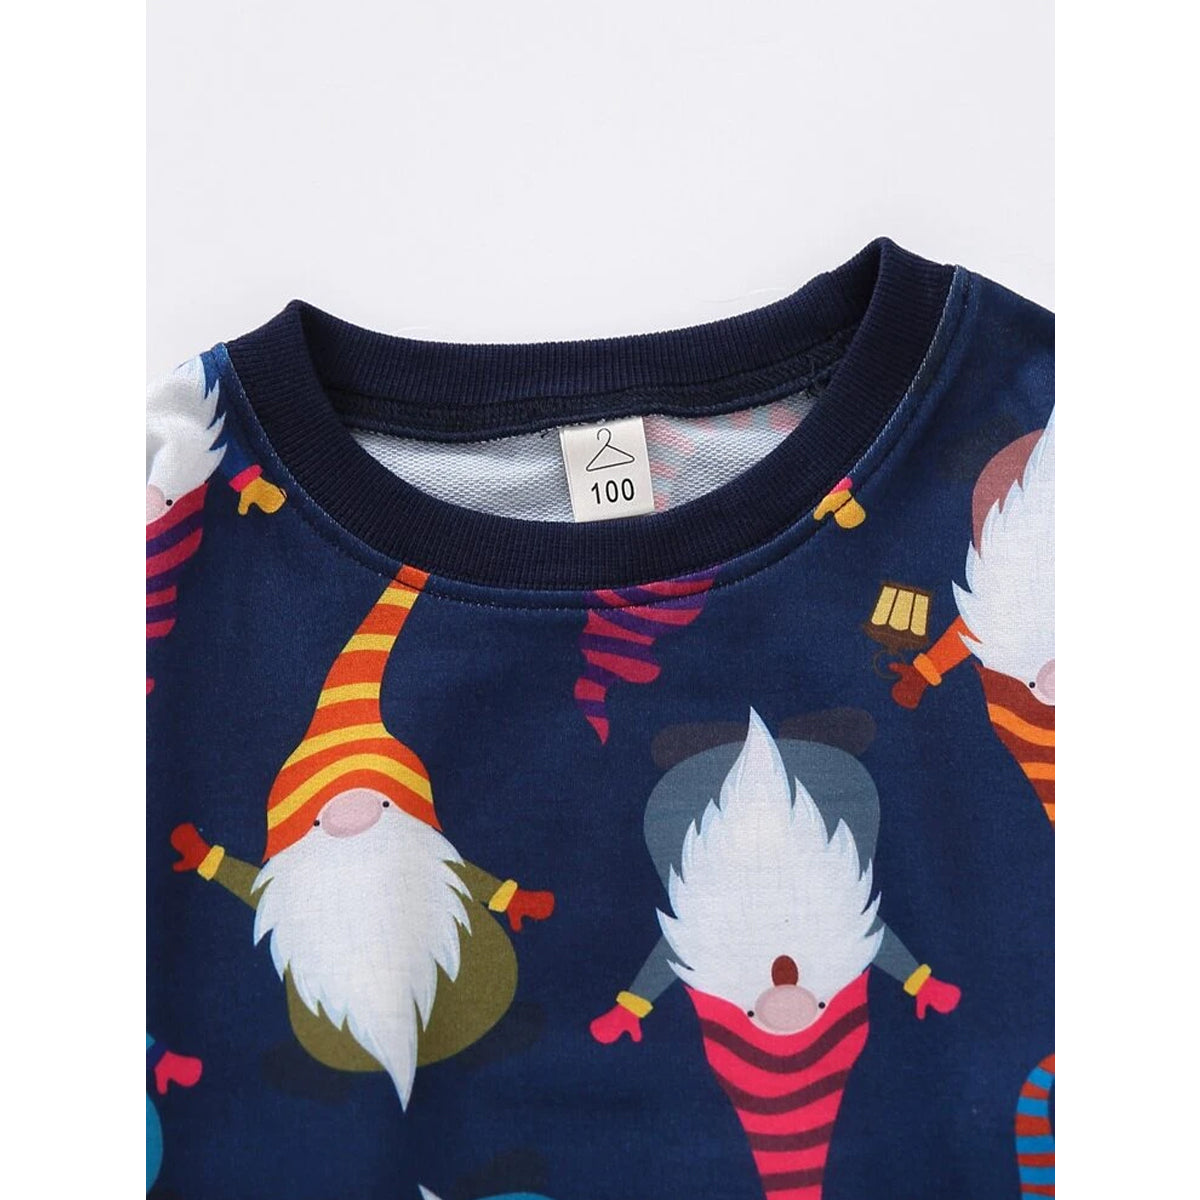 Venutaloza Full Sleeve Round Nick Sewing Patterns Stripe Tee T-Shirt For Boy's & Girl's.